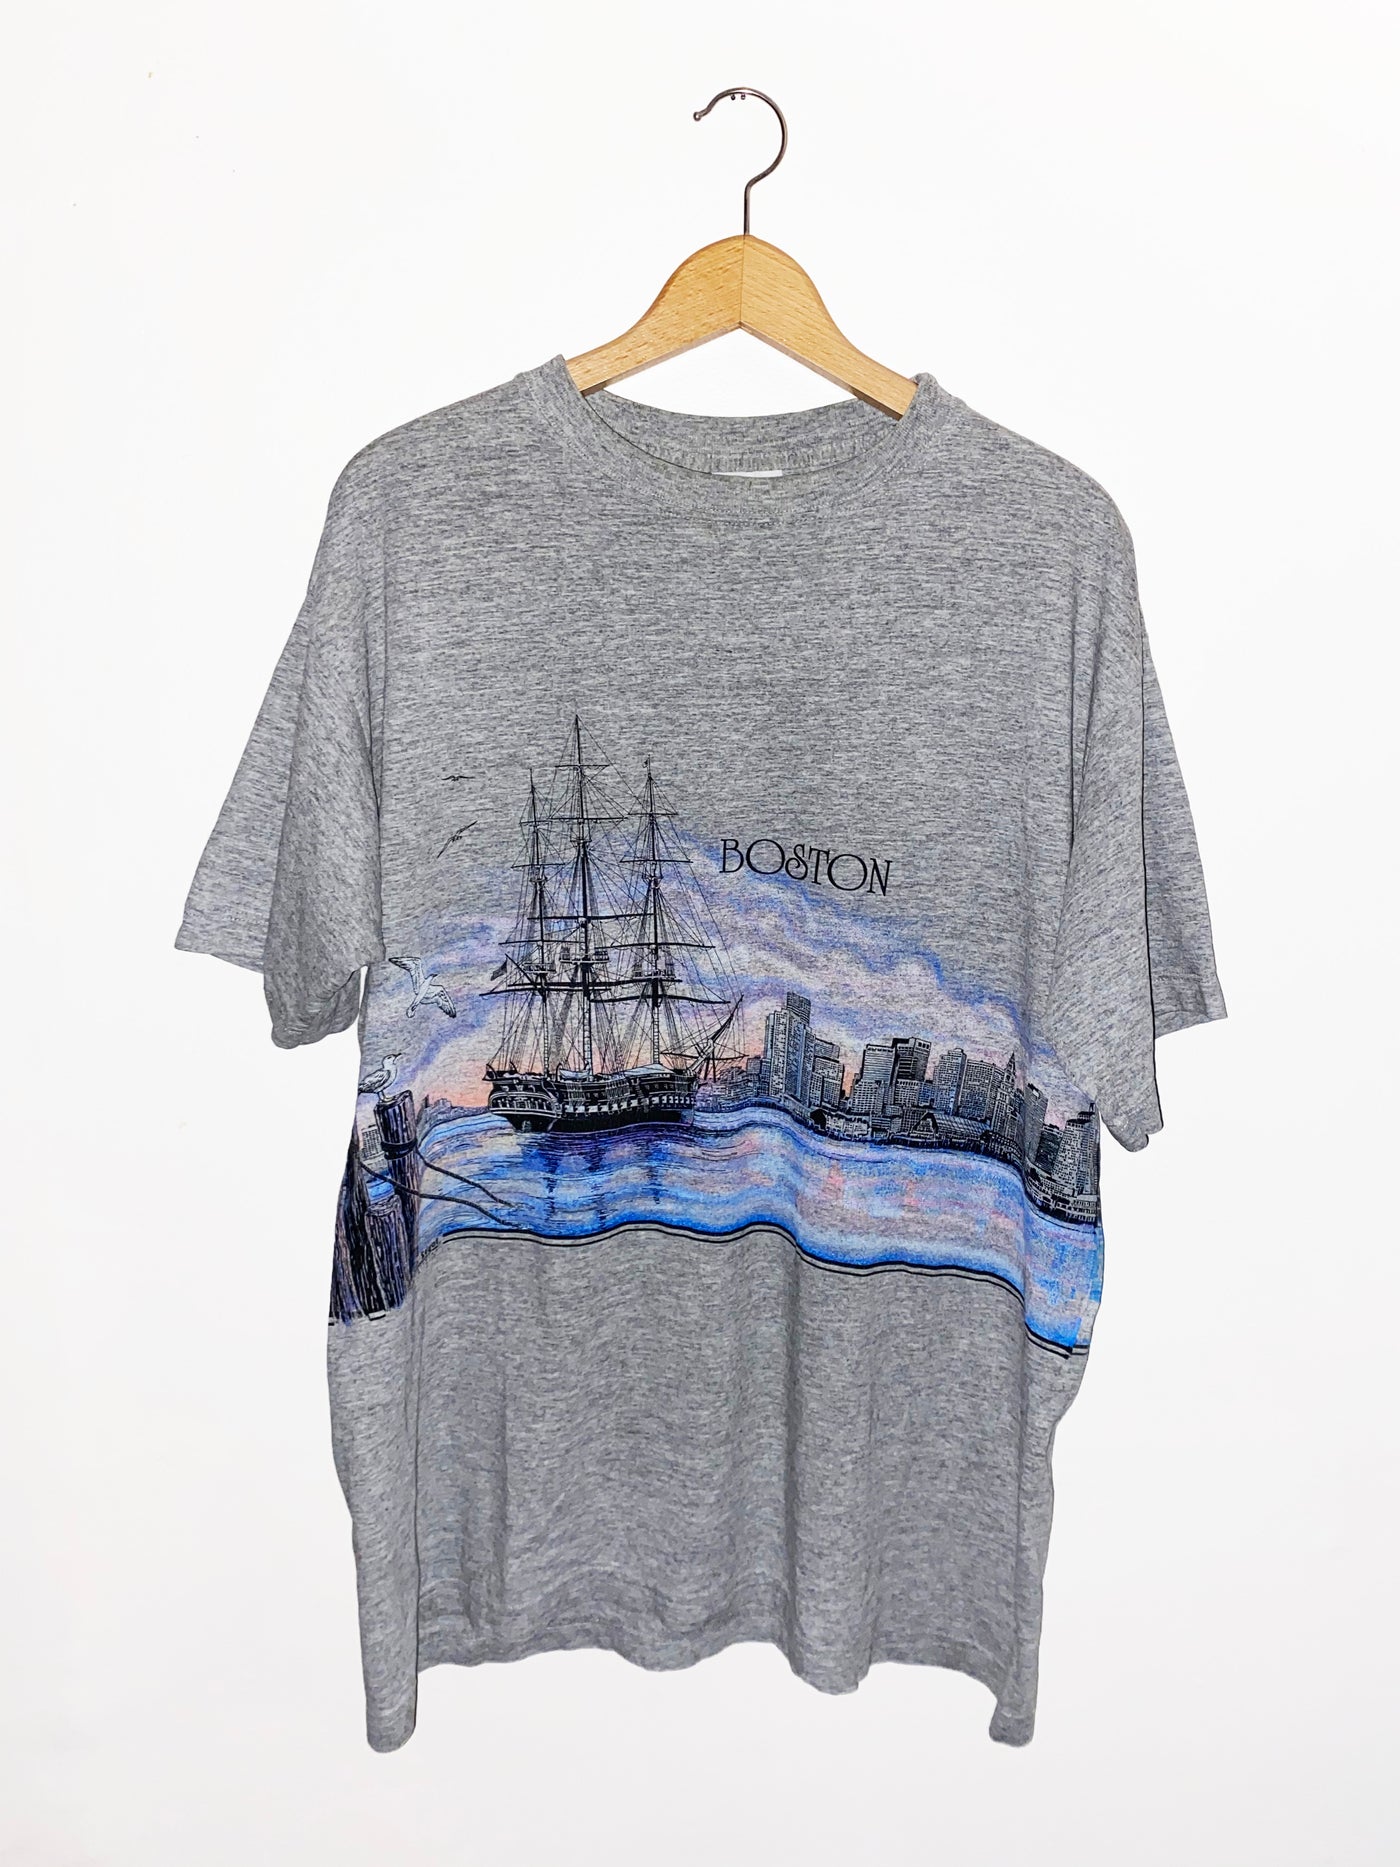 Vintage 1991 Boston All Over Print T-Shirt